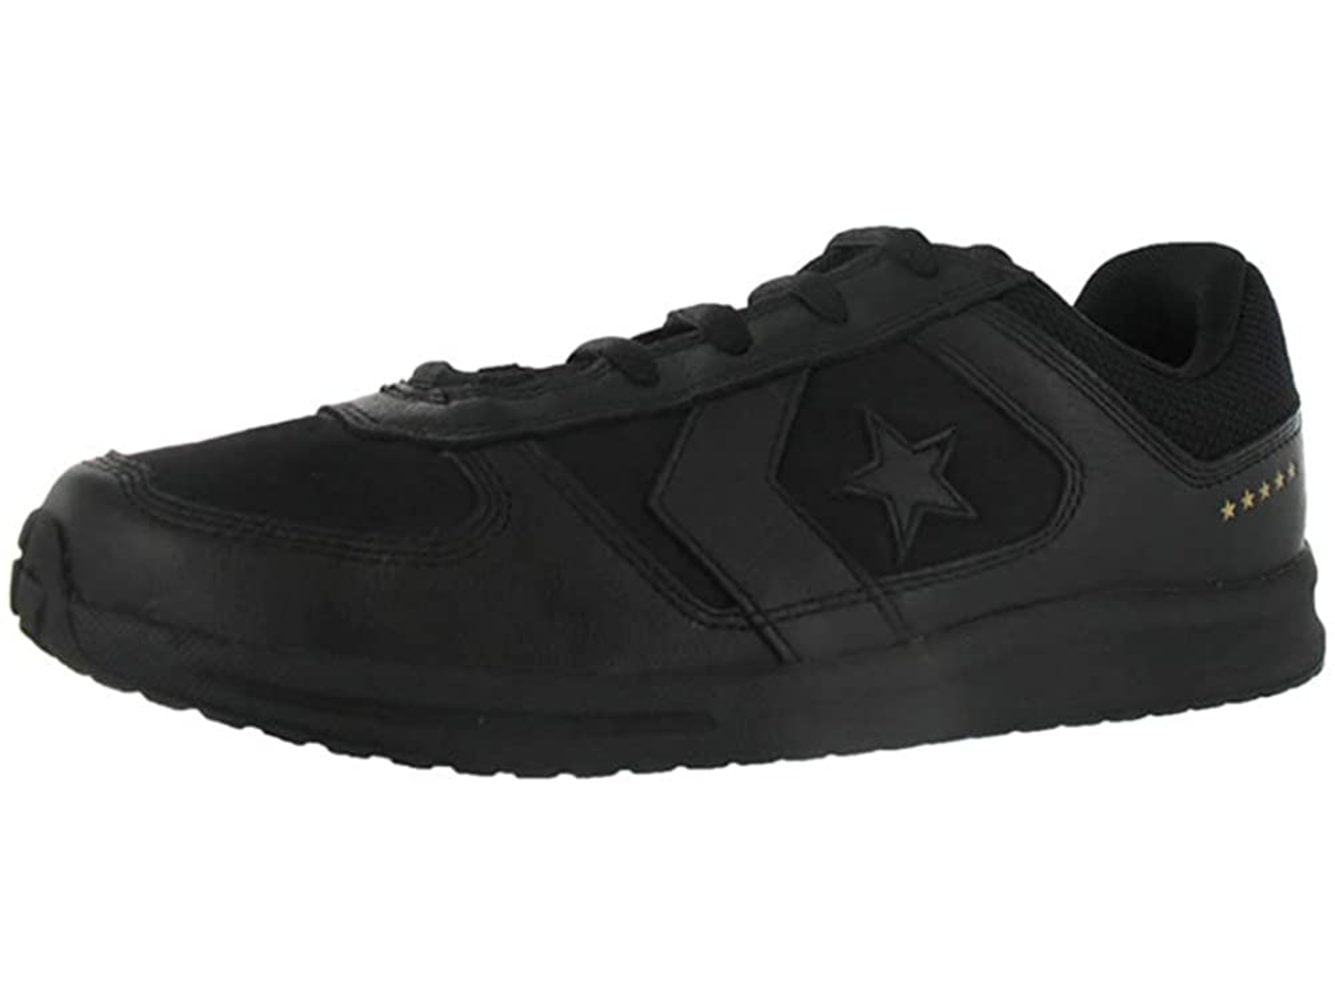 black converse size 8.5